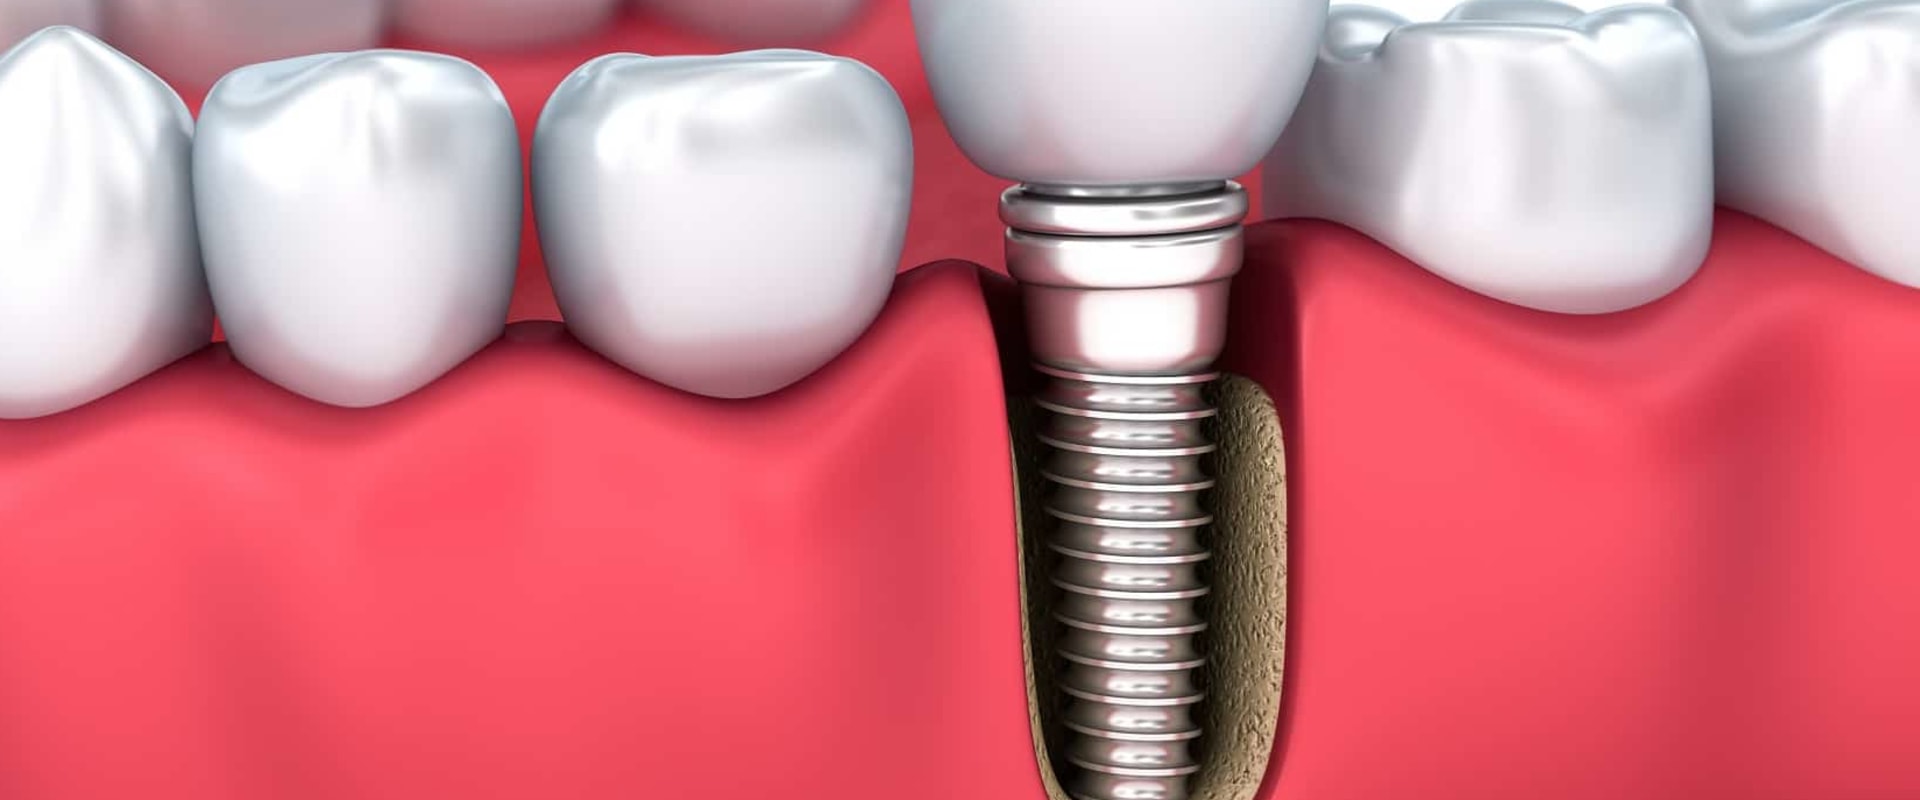 Are dental implants a bad idea?